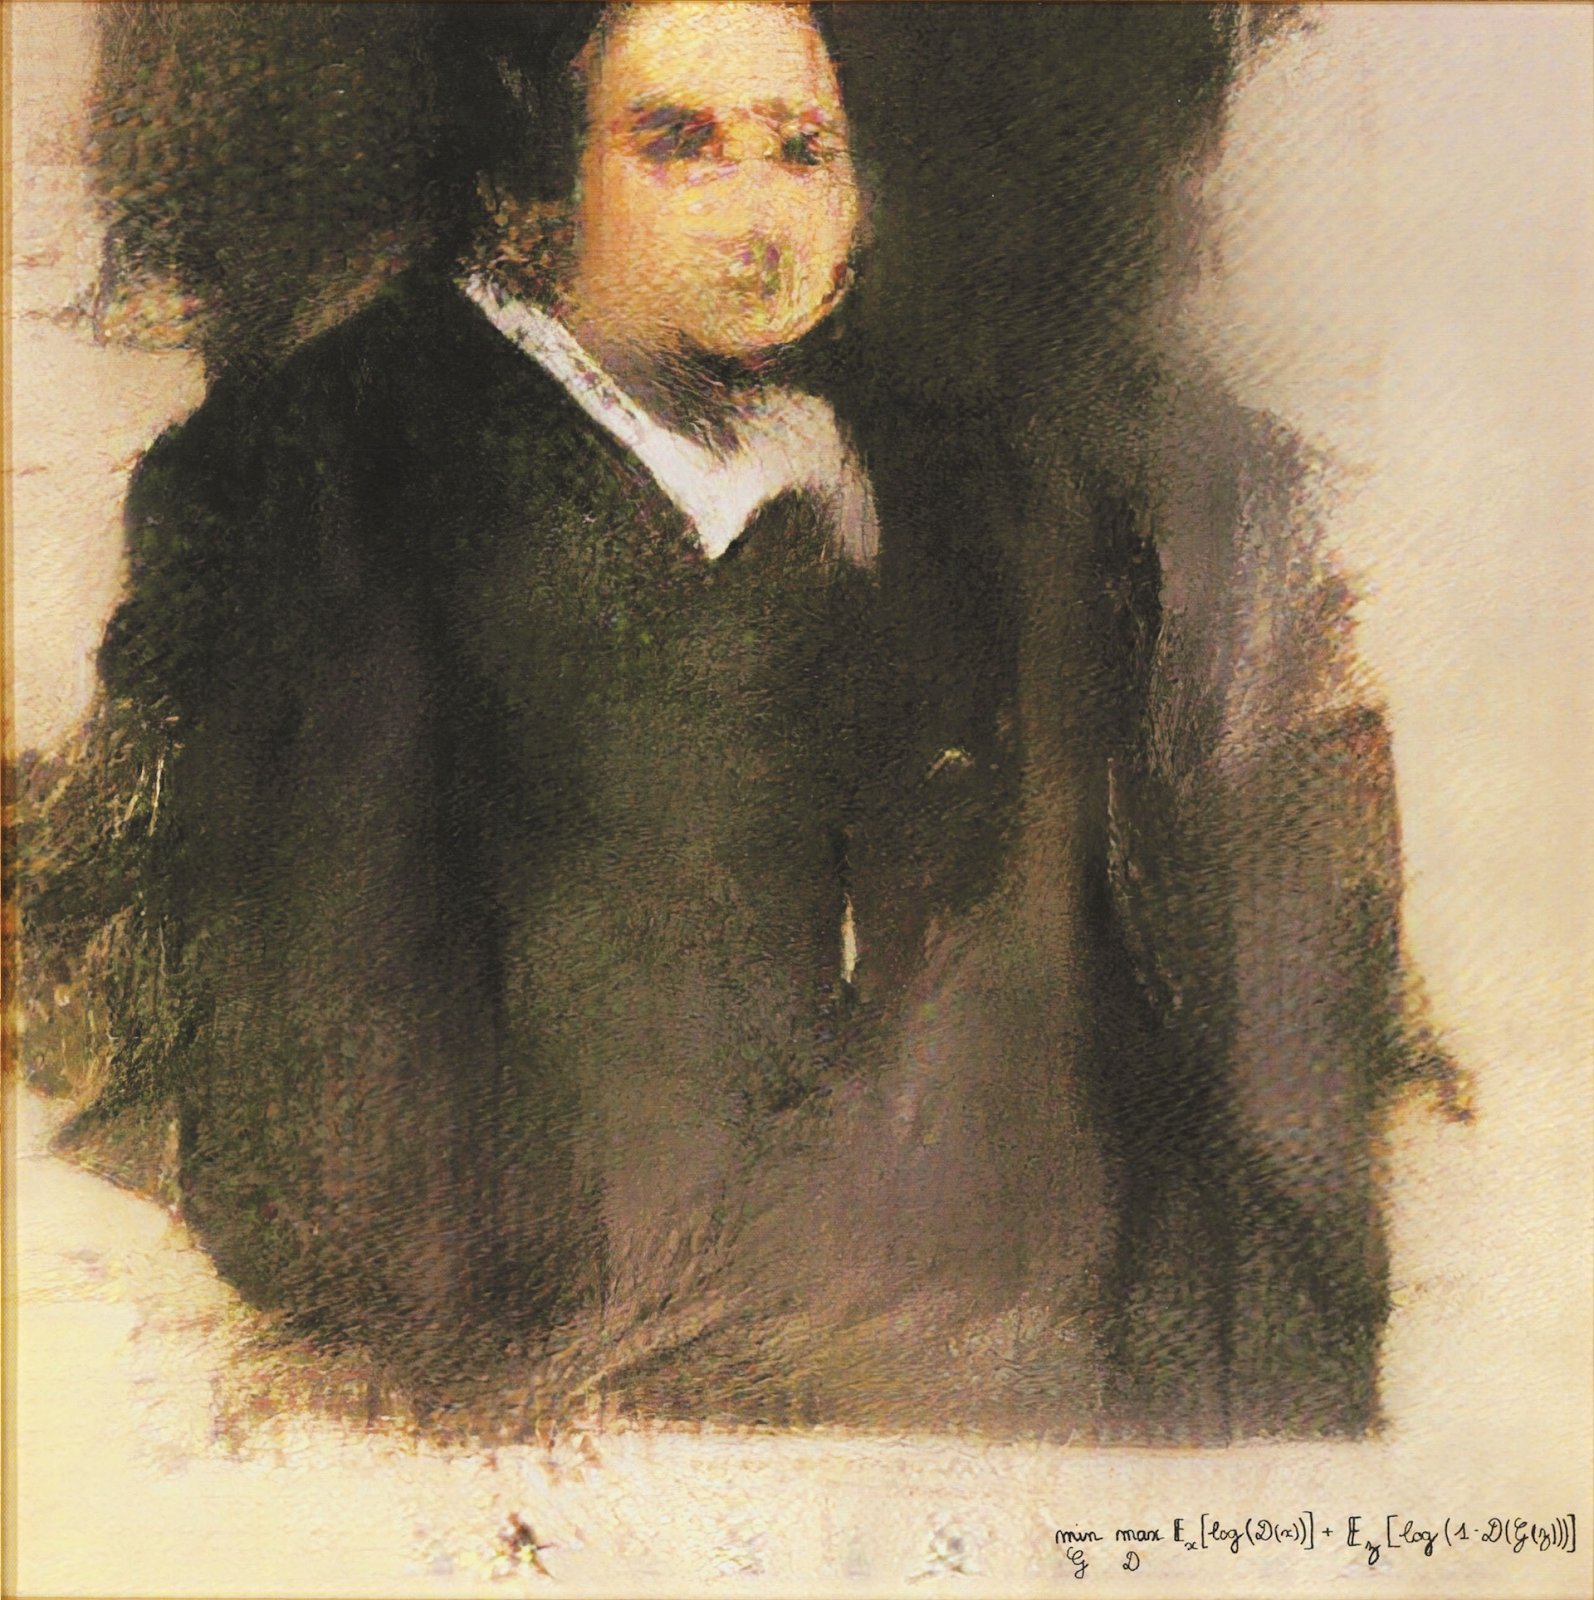 The Portrait of Edmond de Belamy from Obvious